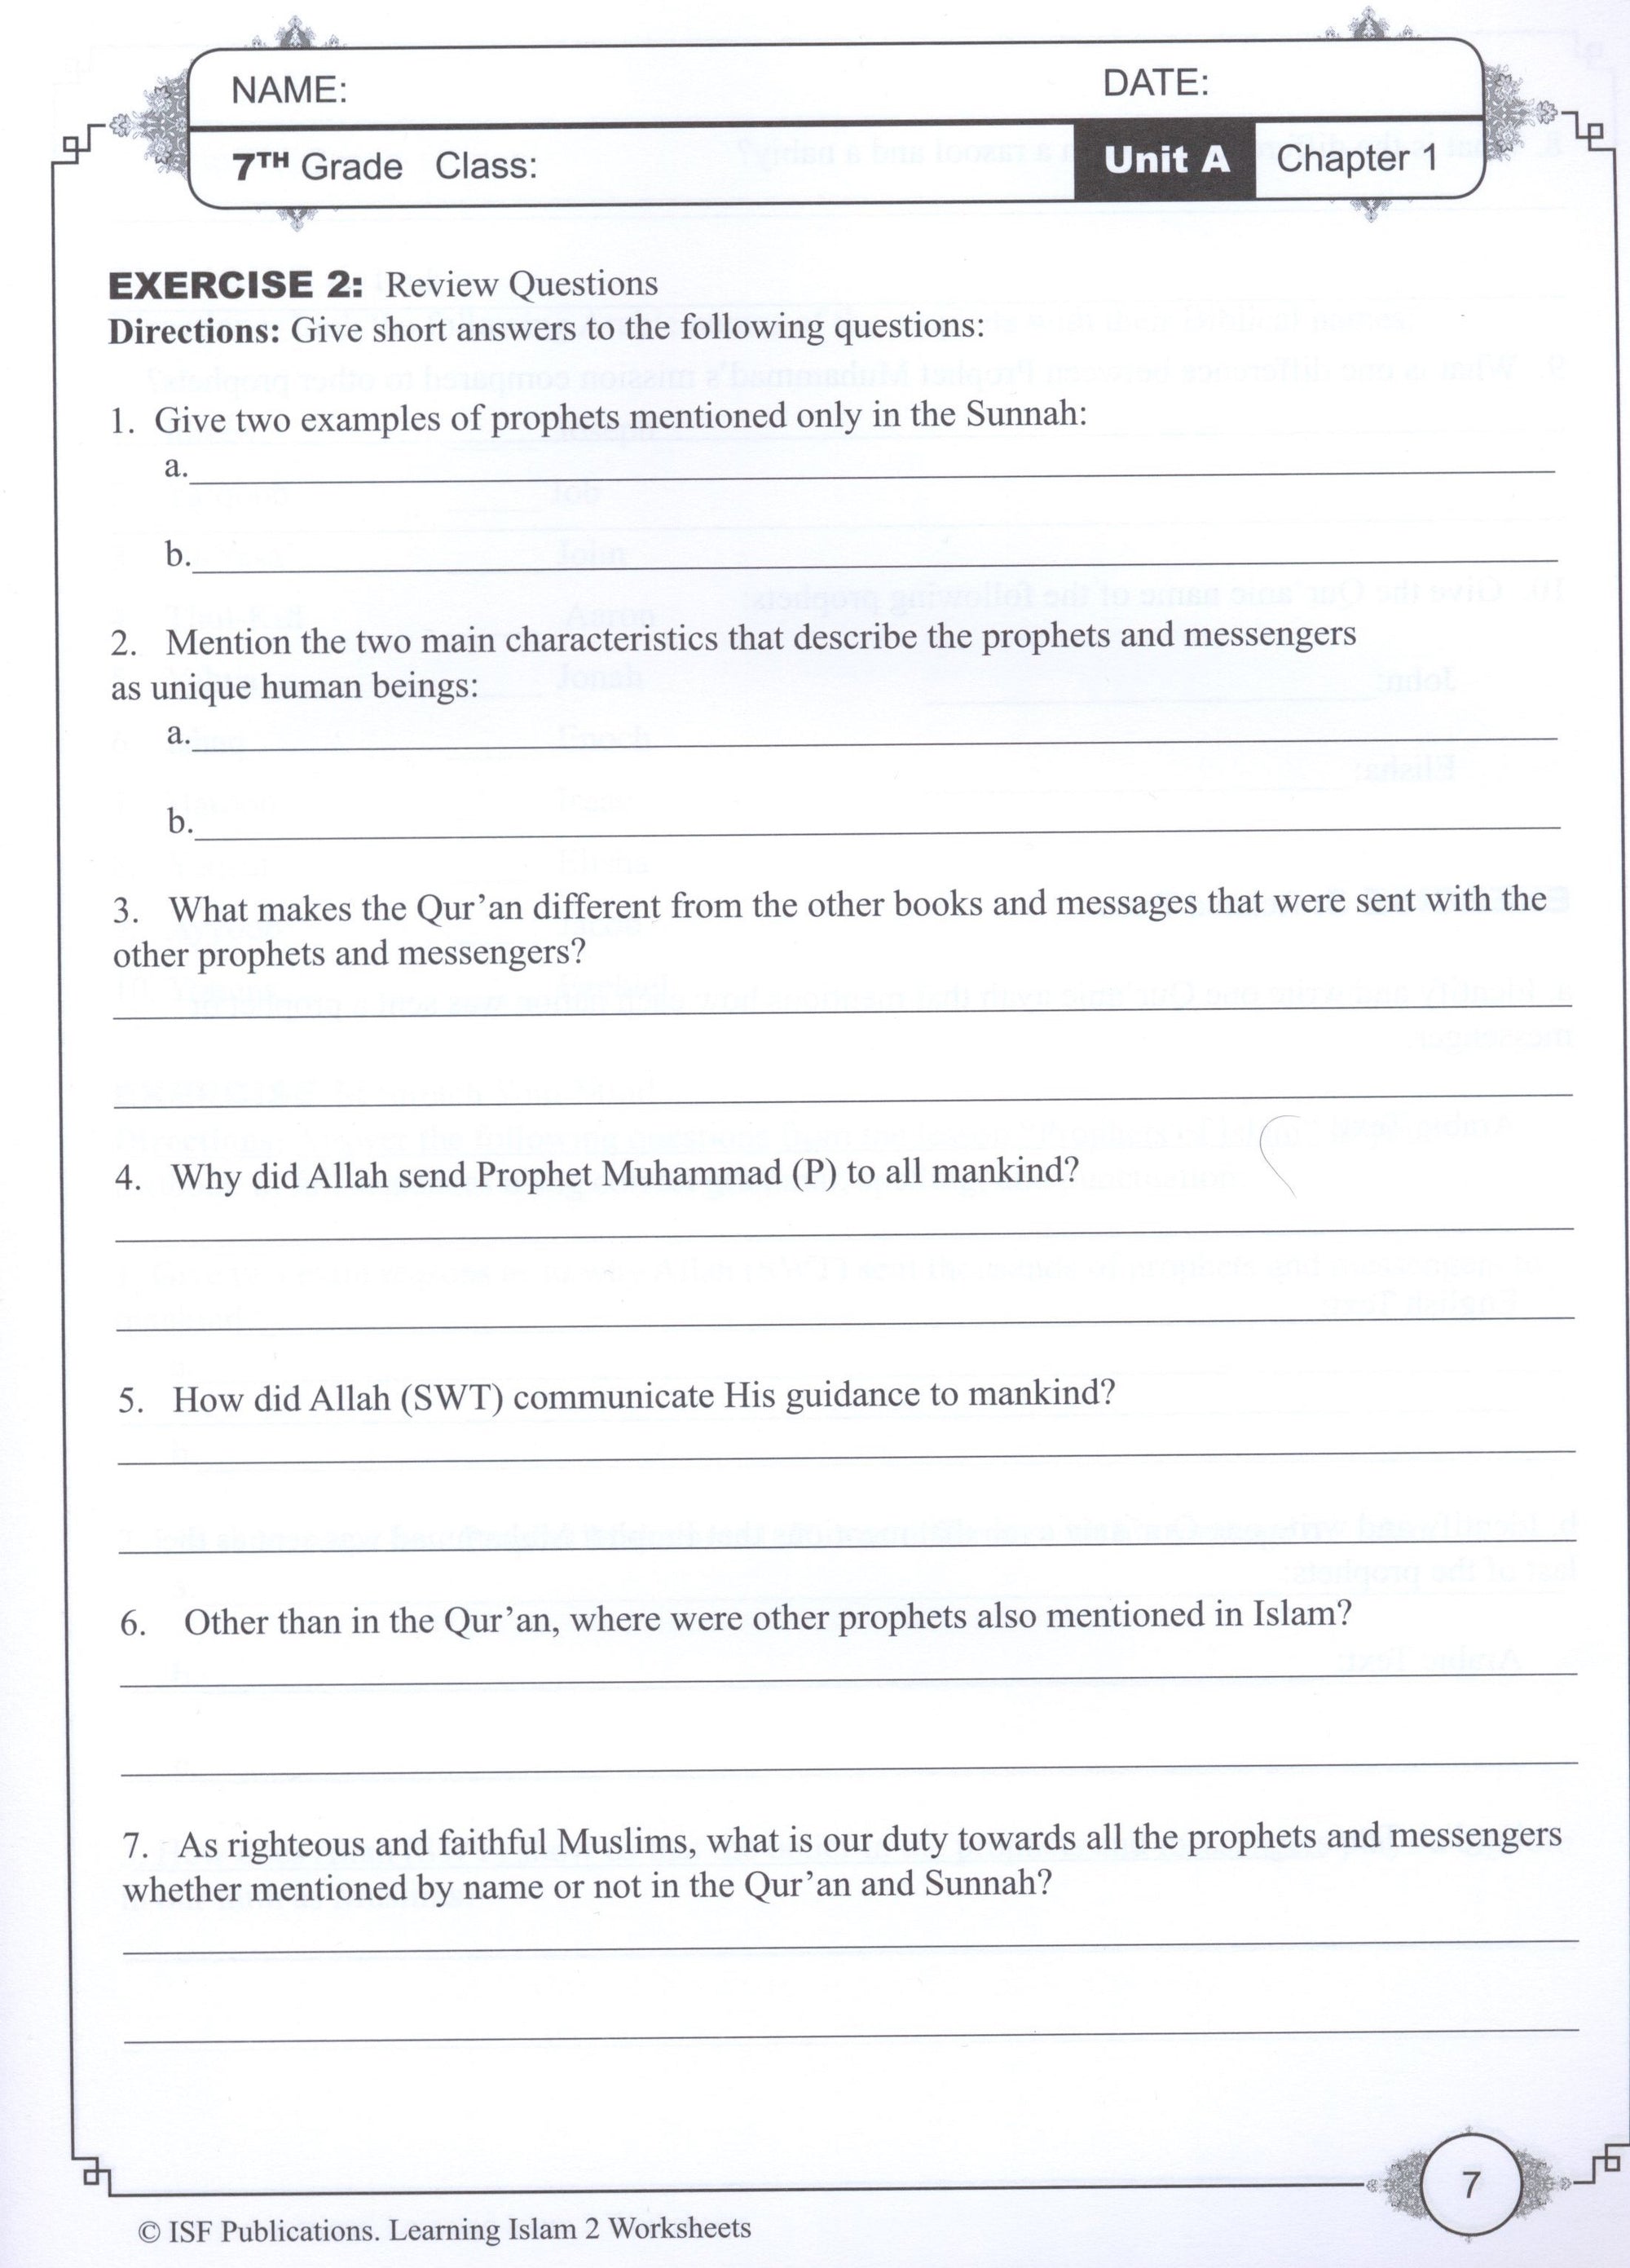 Learning Islam Workbook Level 2 (7th Grade)